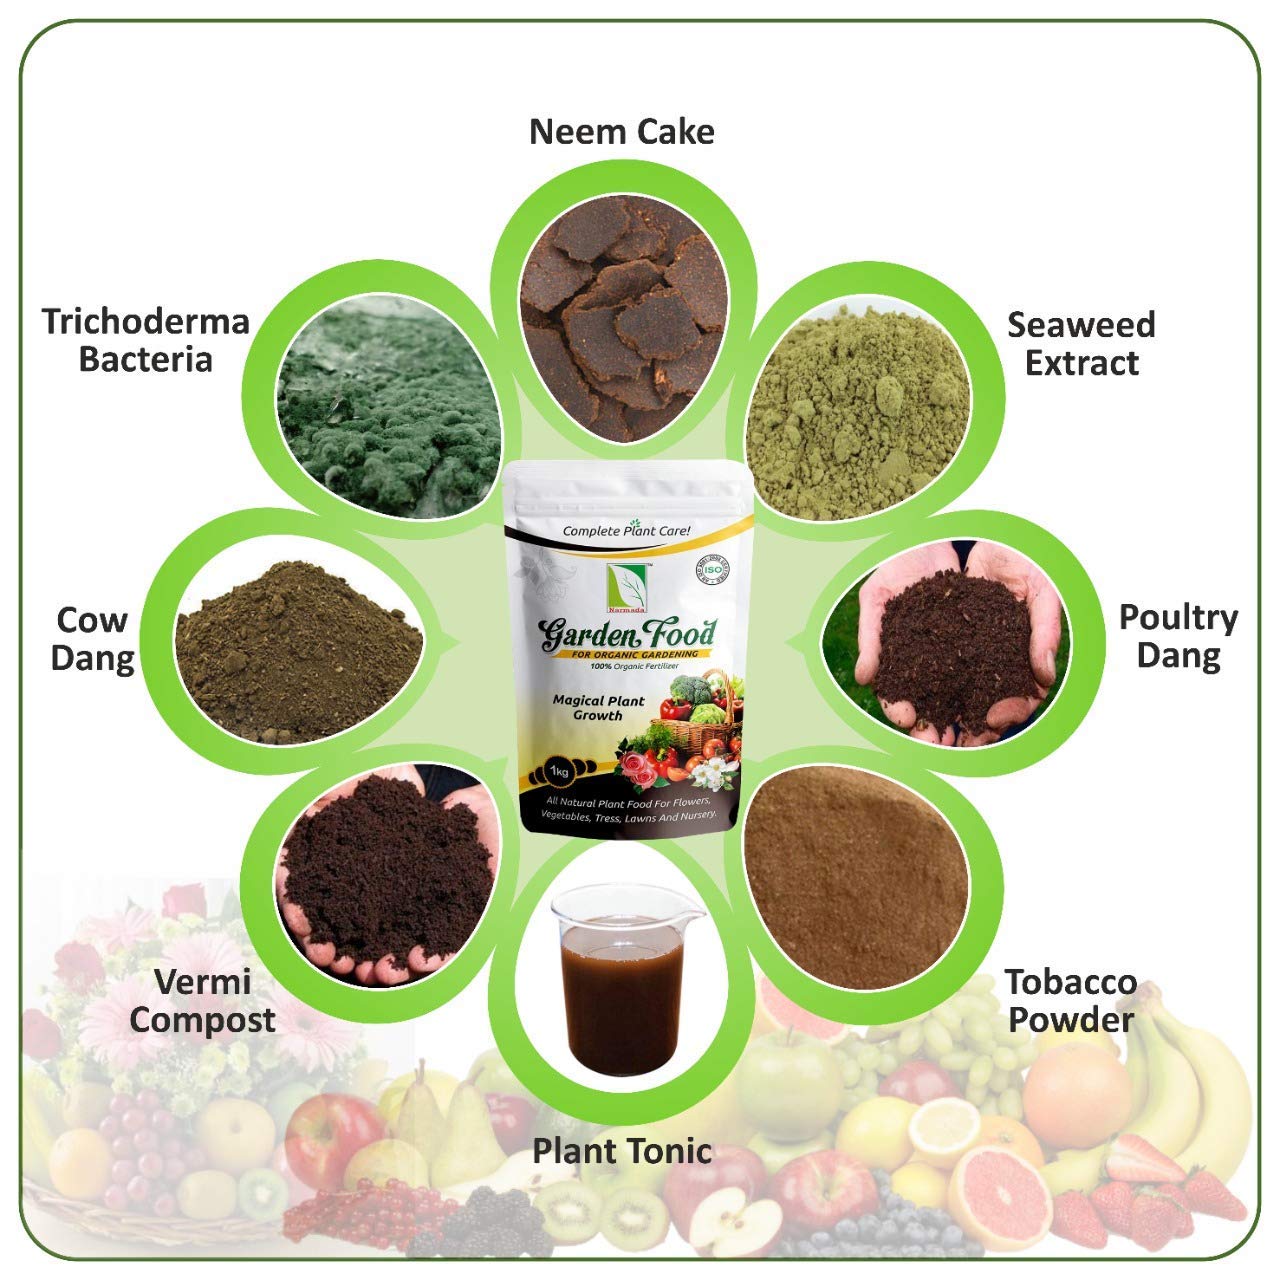 Garden Food Organic Fertilizer and Manure by Pradhan (1 Kg)